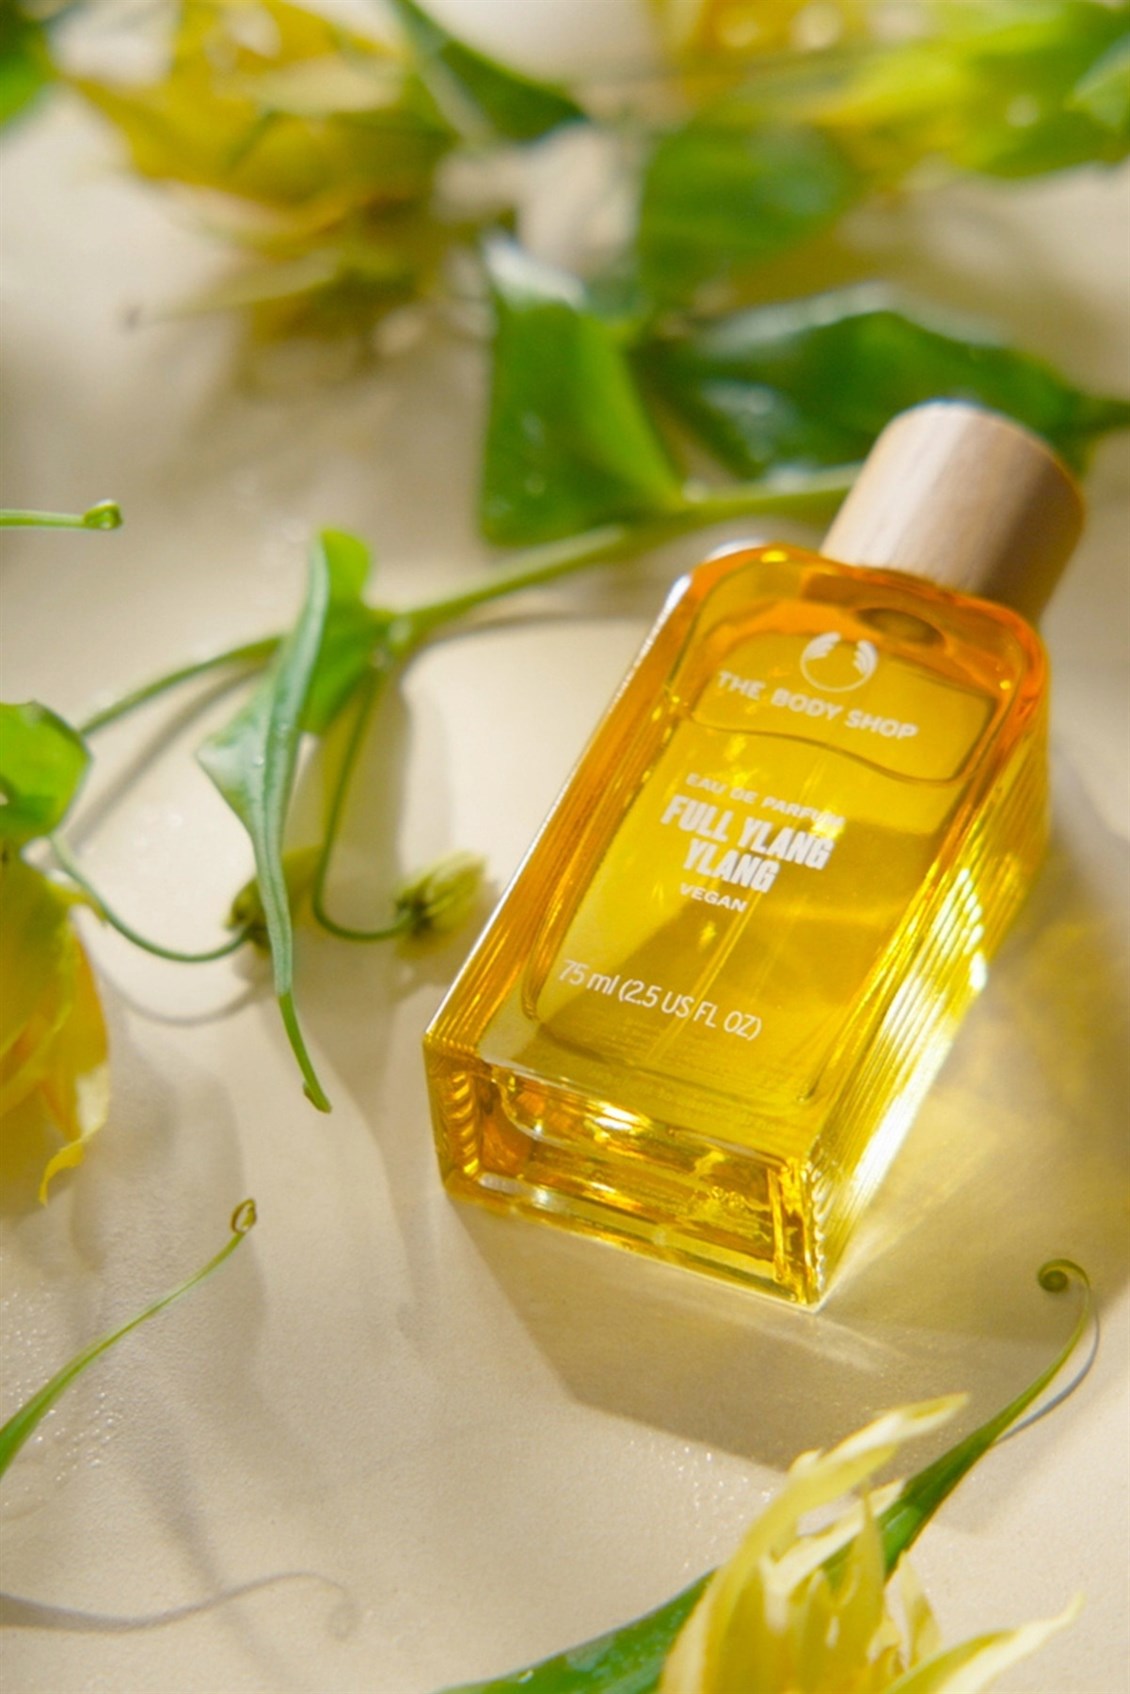 Full Ylang Ylang Eau De Parfüm | The Body Shop